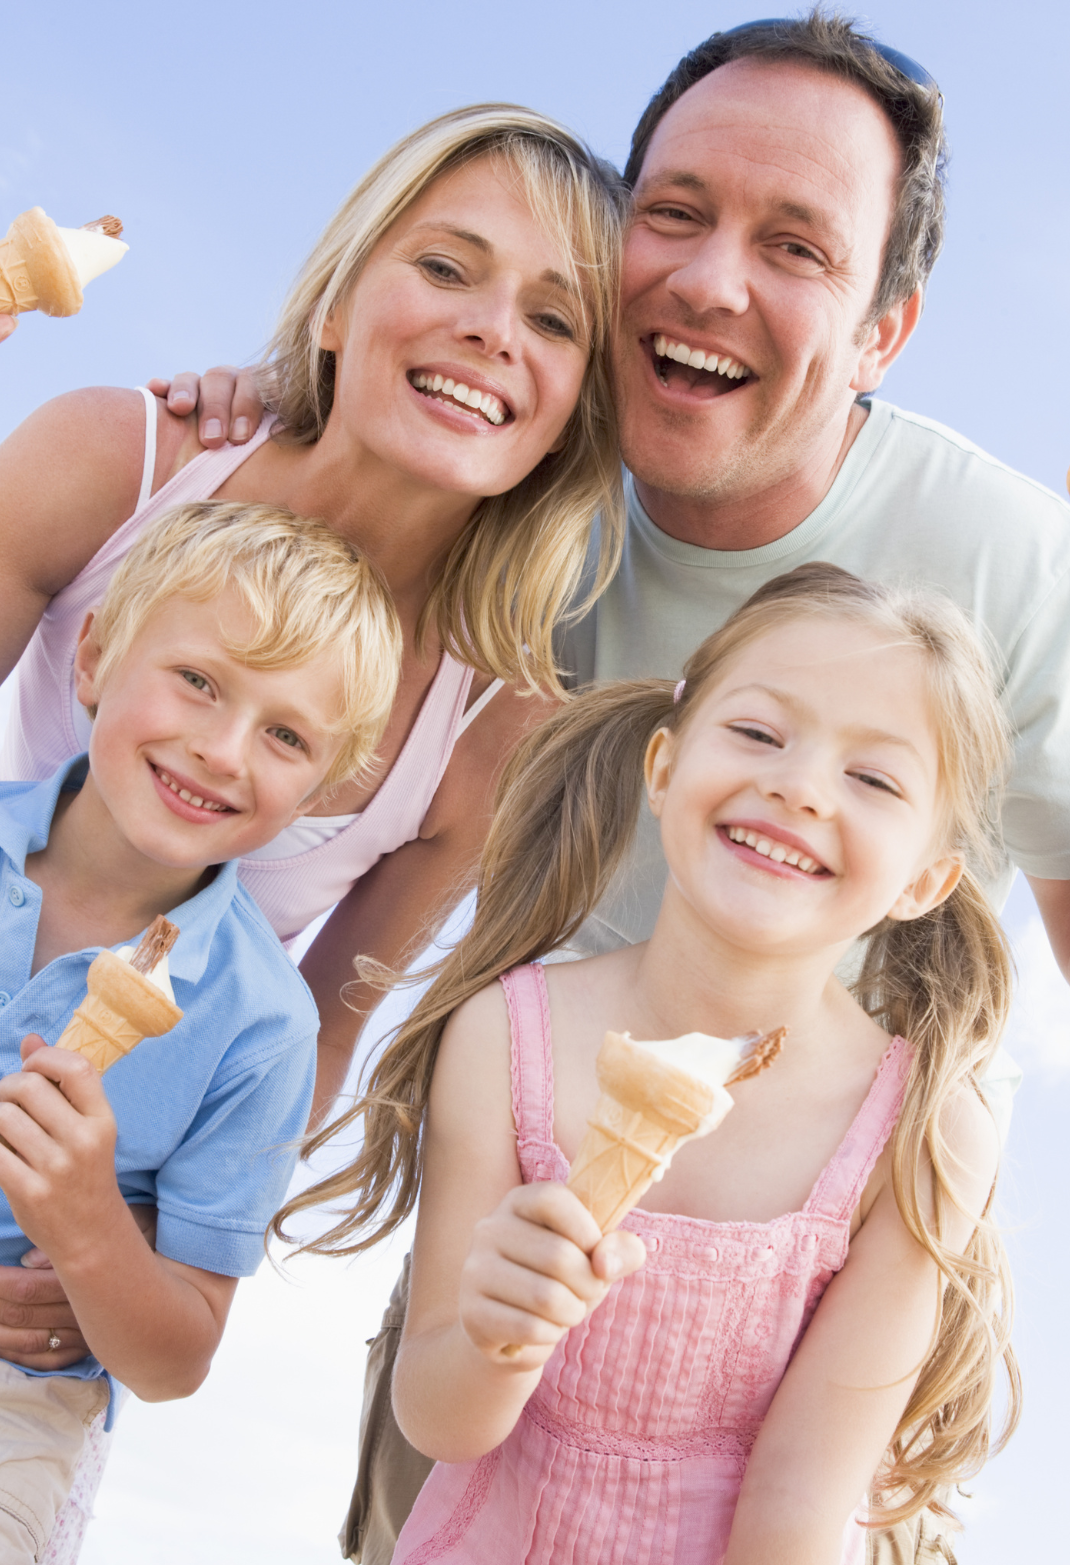 family eating ice cream